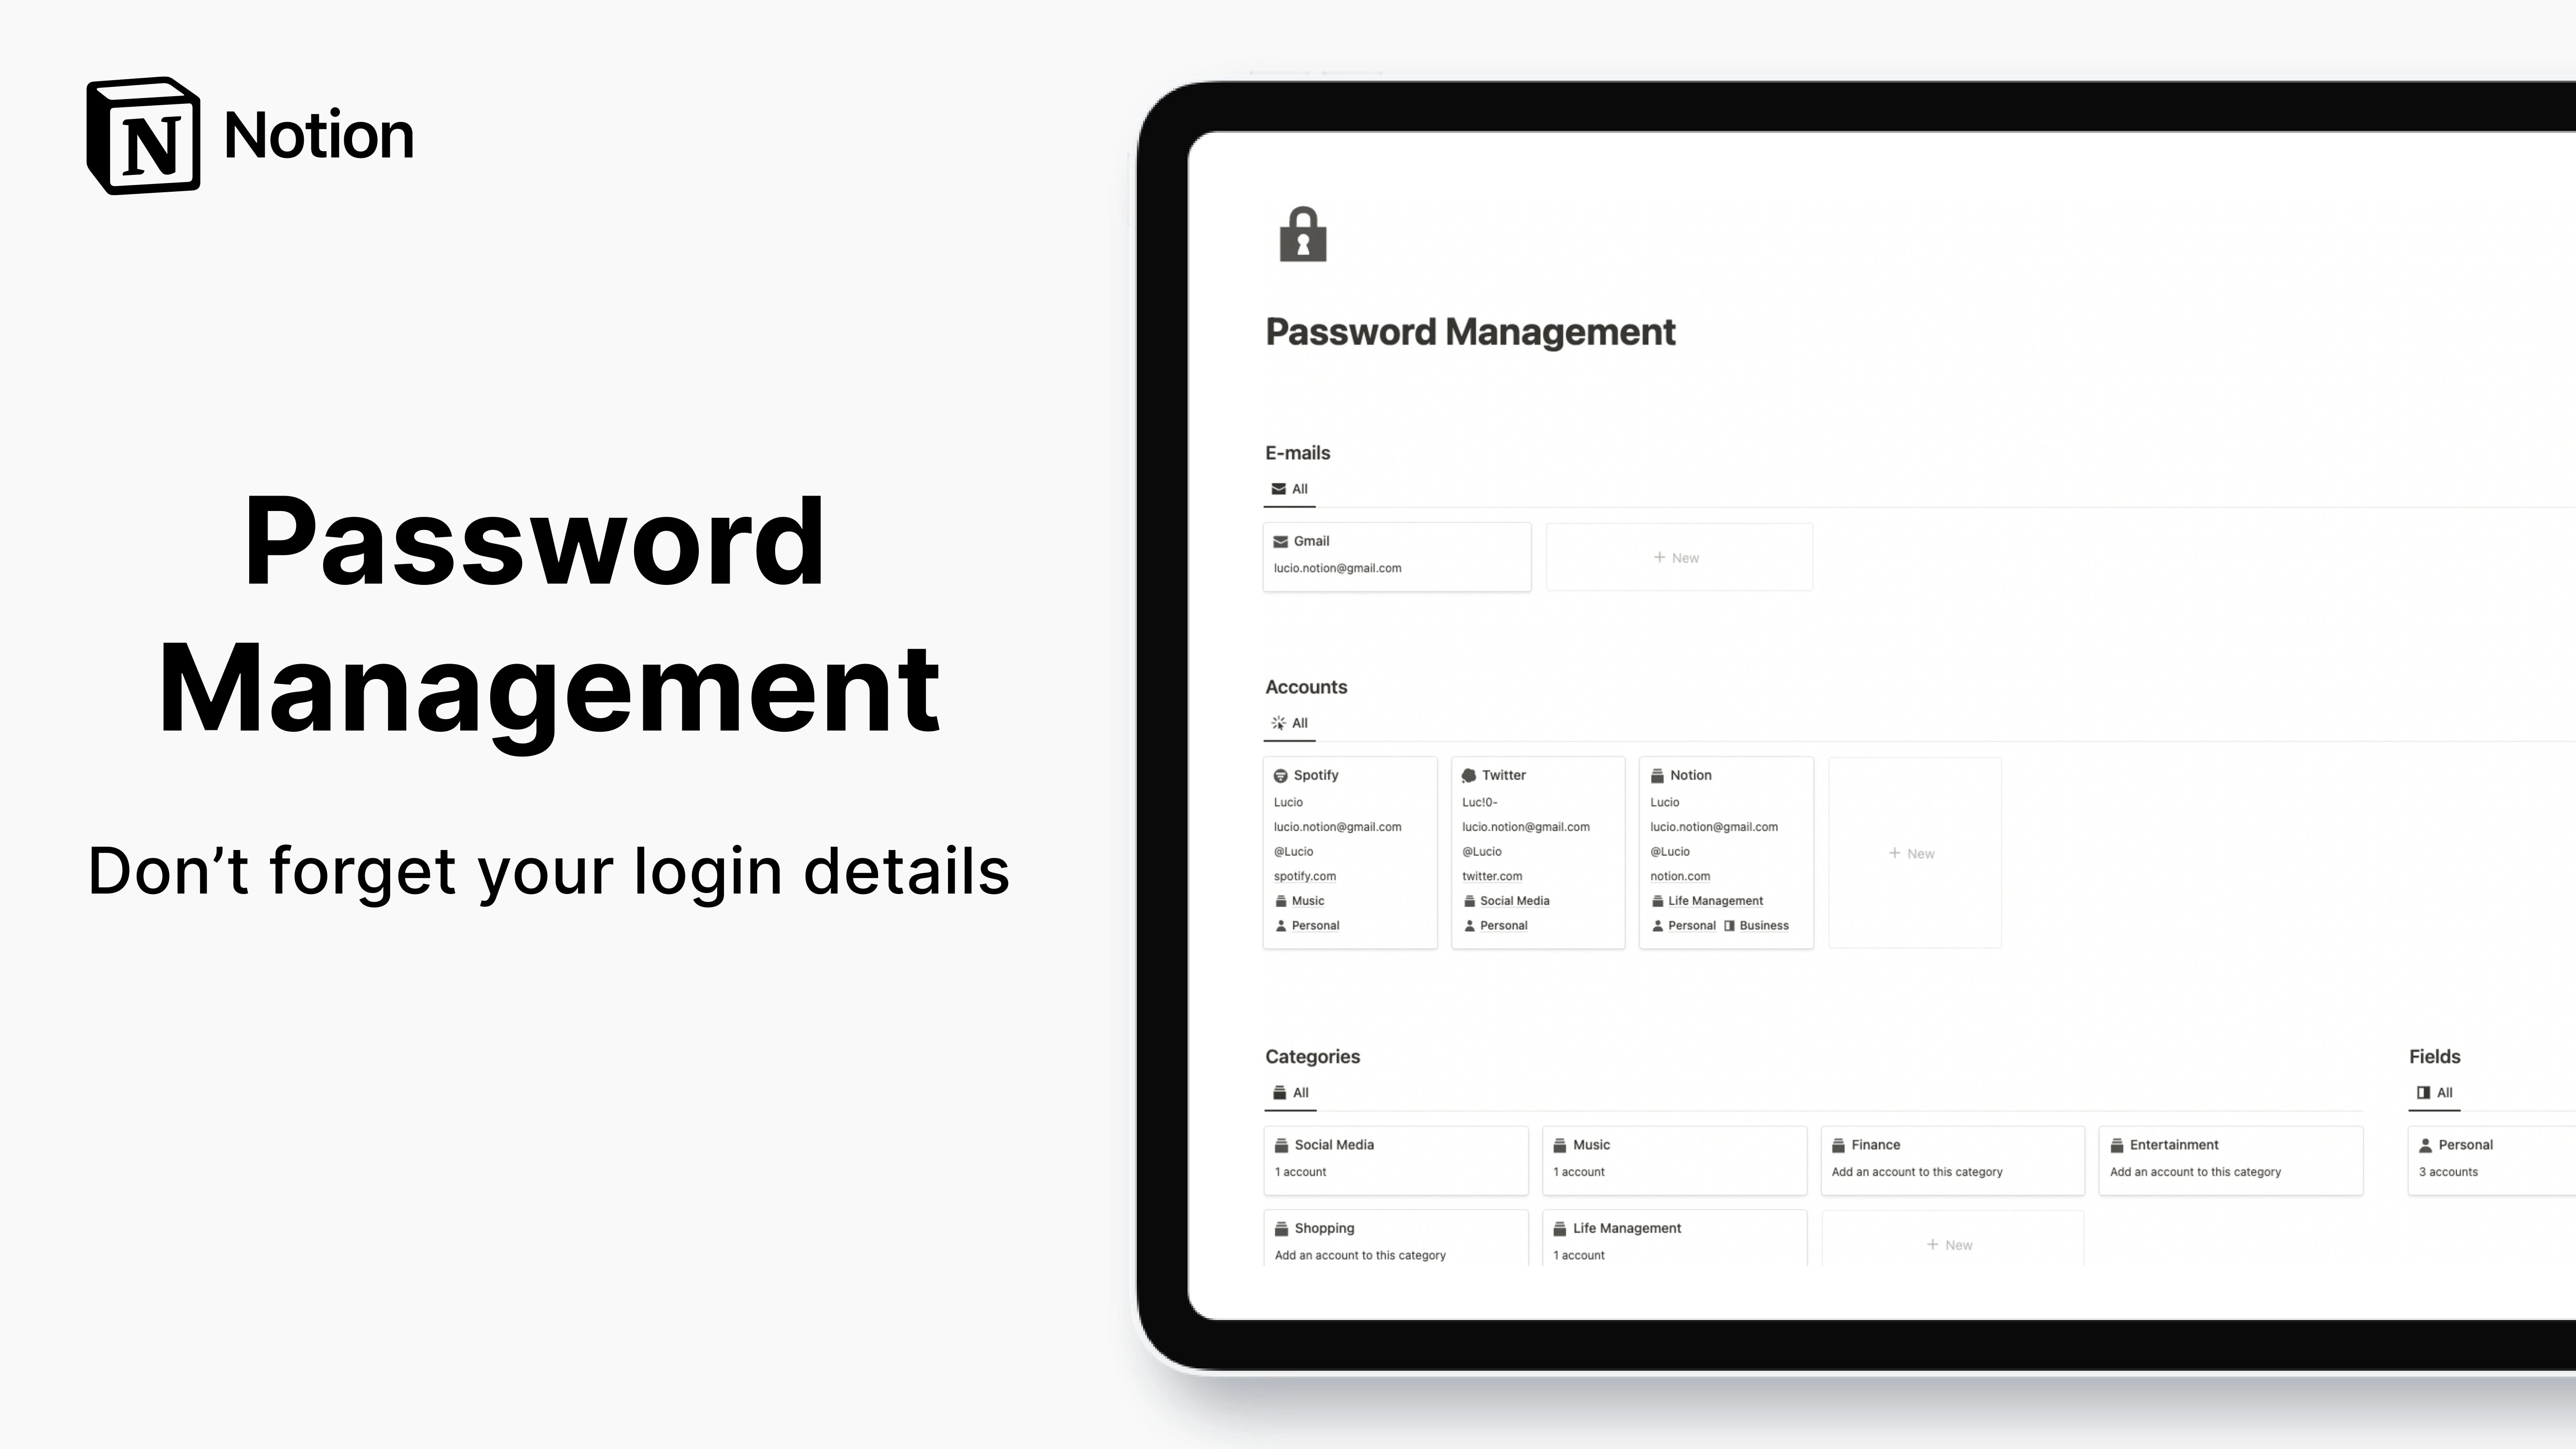 Password Management